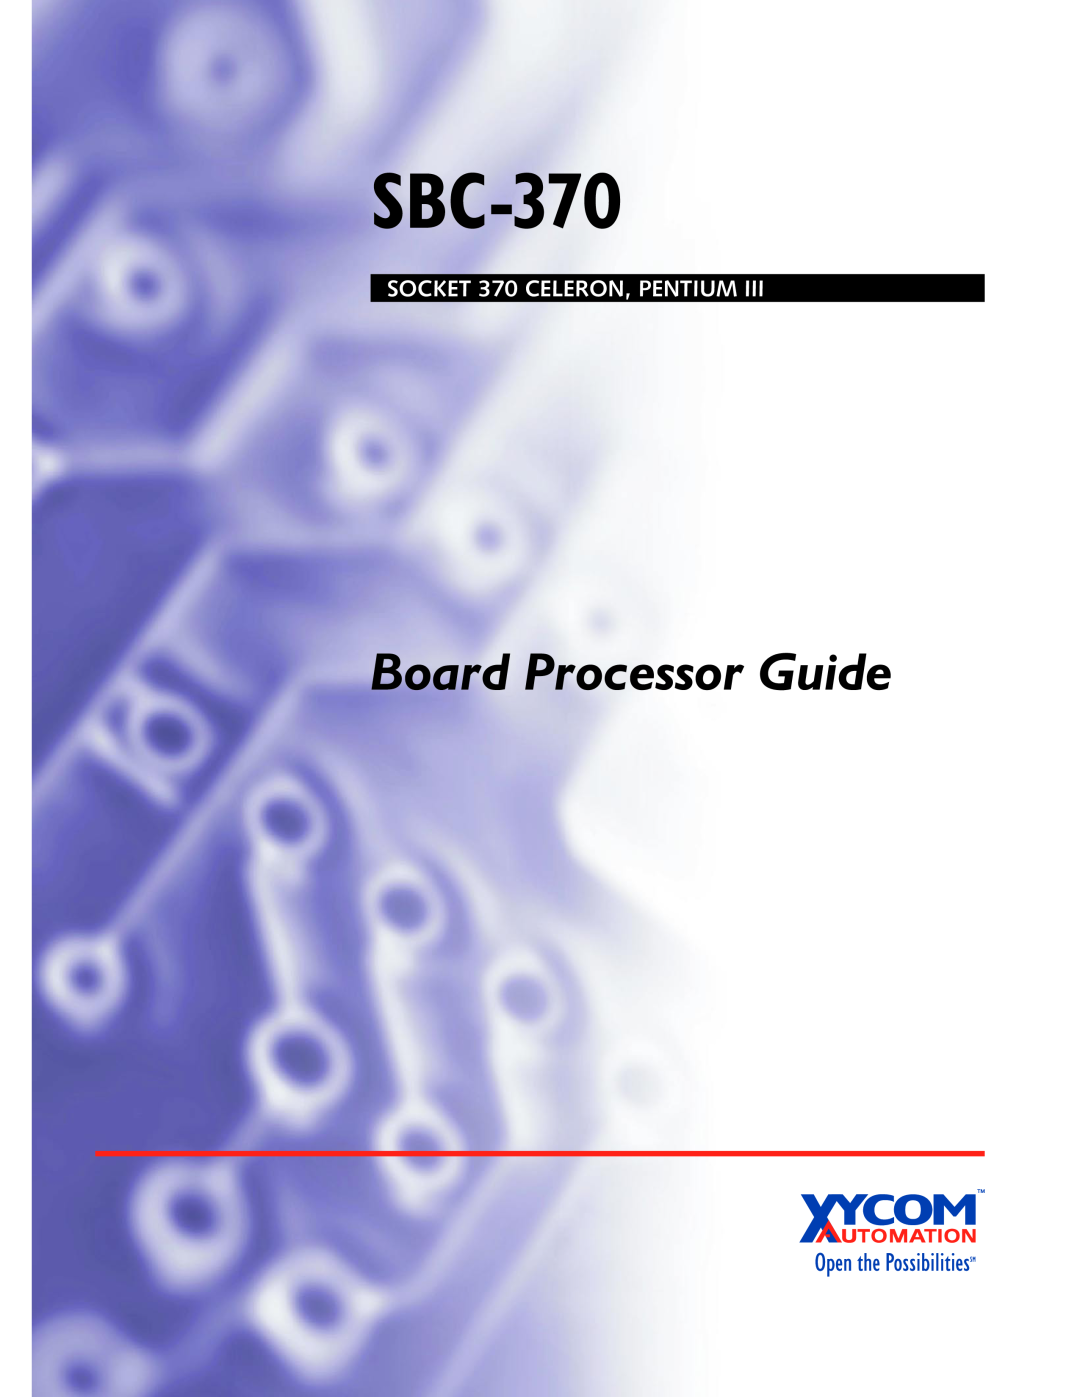 Intel SBC-370 manual SOCKET 370 CELERON, PENTIUM, Board Processor Guide 